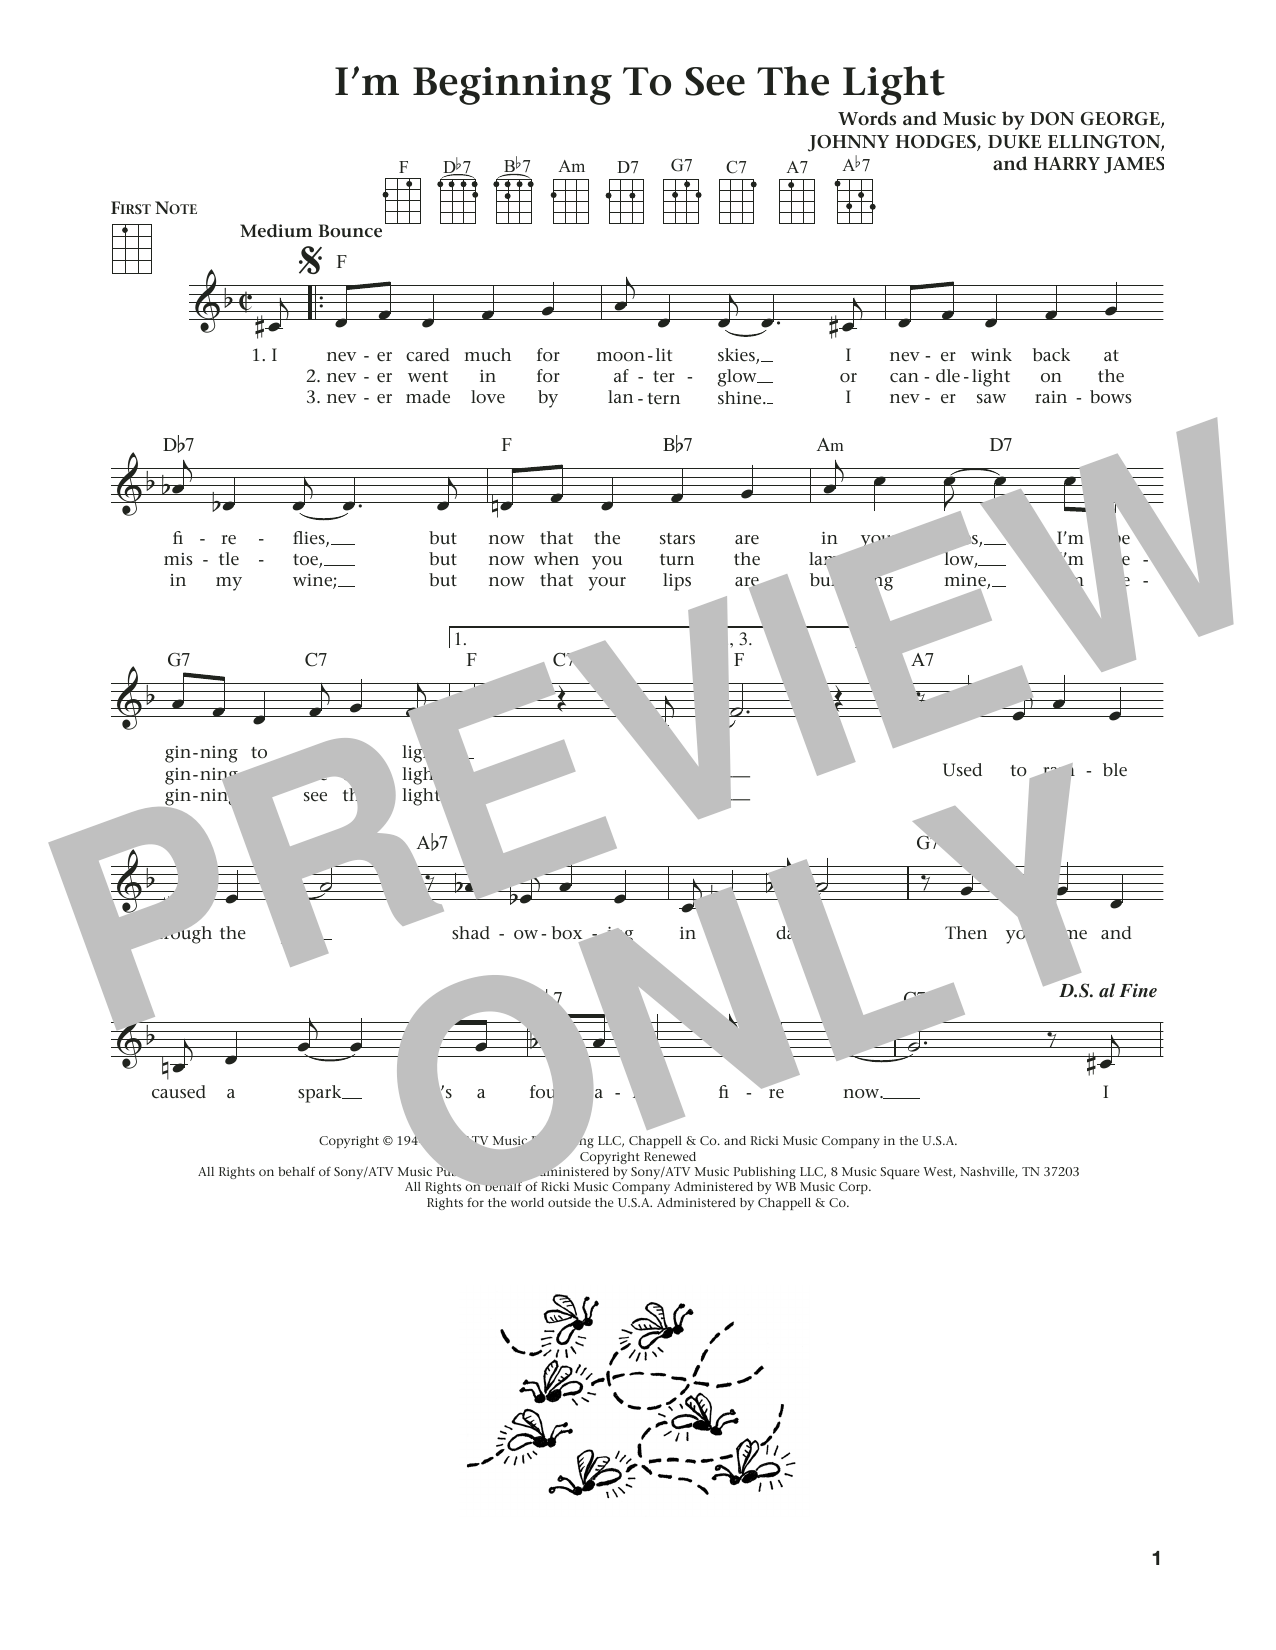 Duke Ellington I'm Beginning To See The Light (from The Daily Ukulele) (arr. Liz and Jim Beloff) Sheet Music Notes & Chords for Ukulele - Download or Print PDF